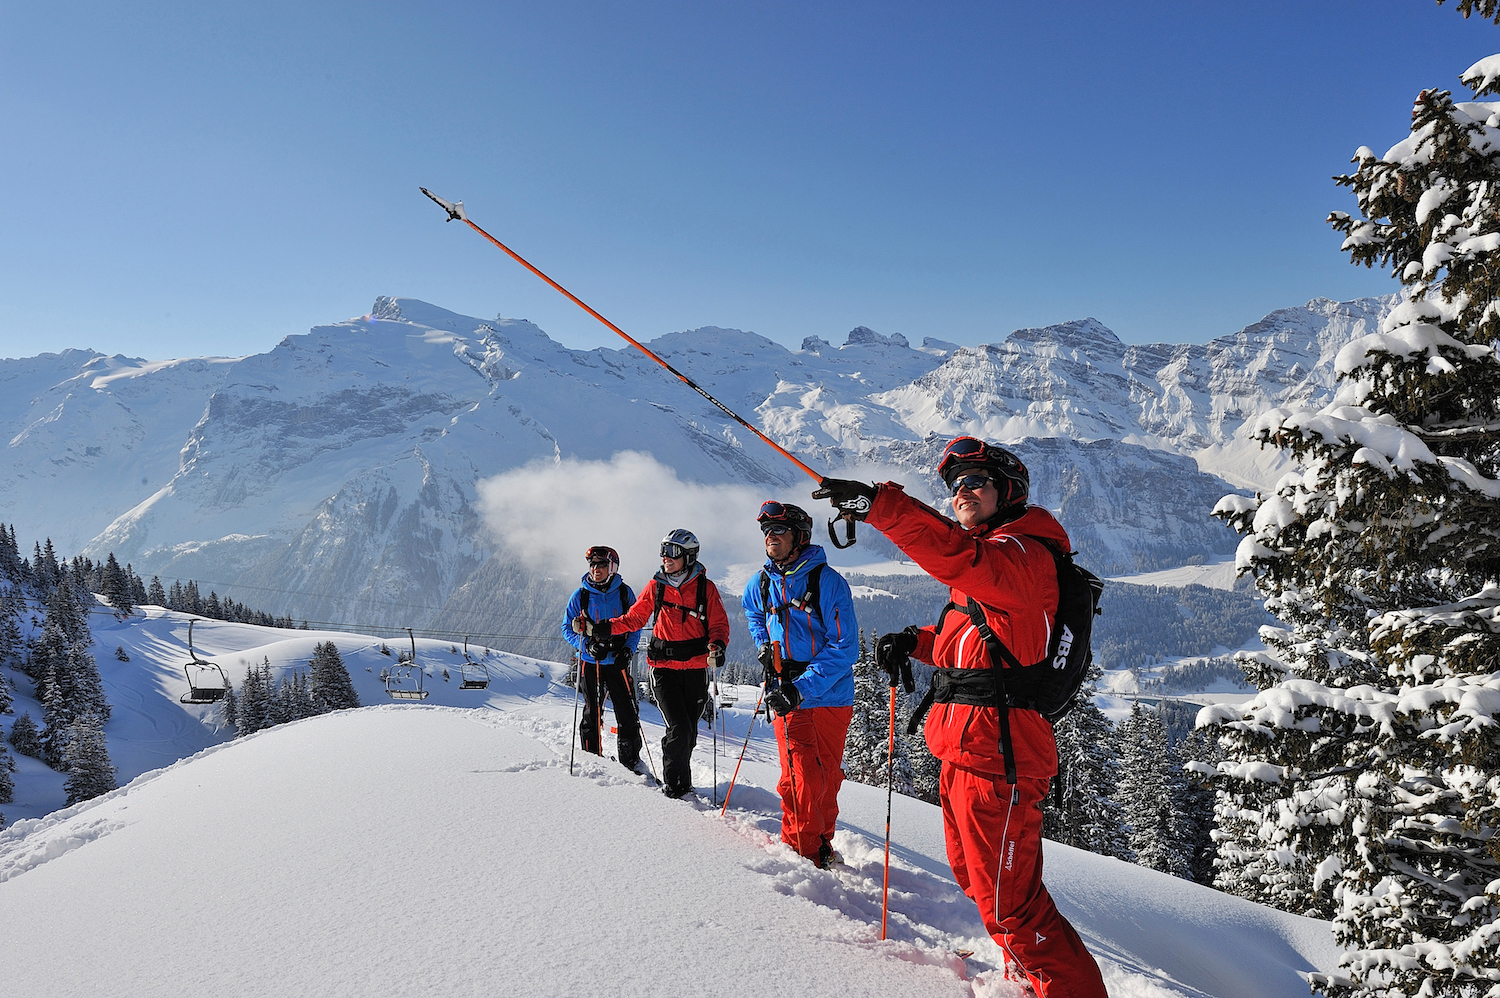 Deciding where to ski next in Engelberg